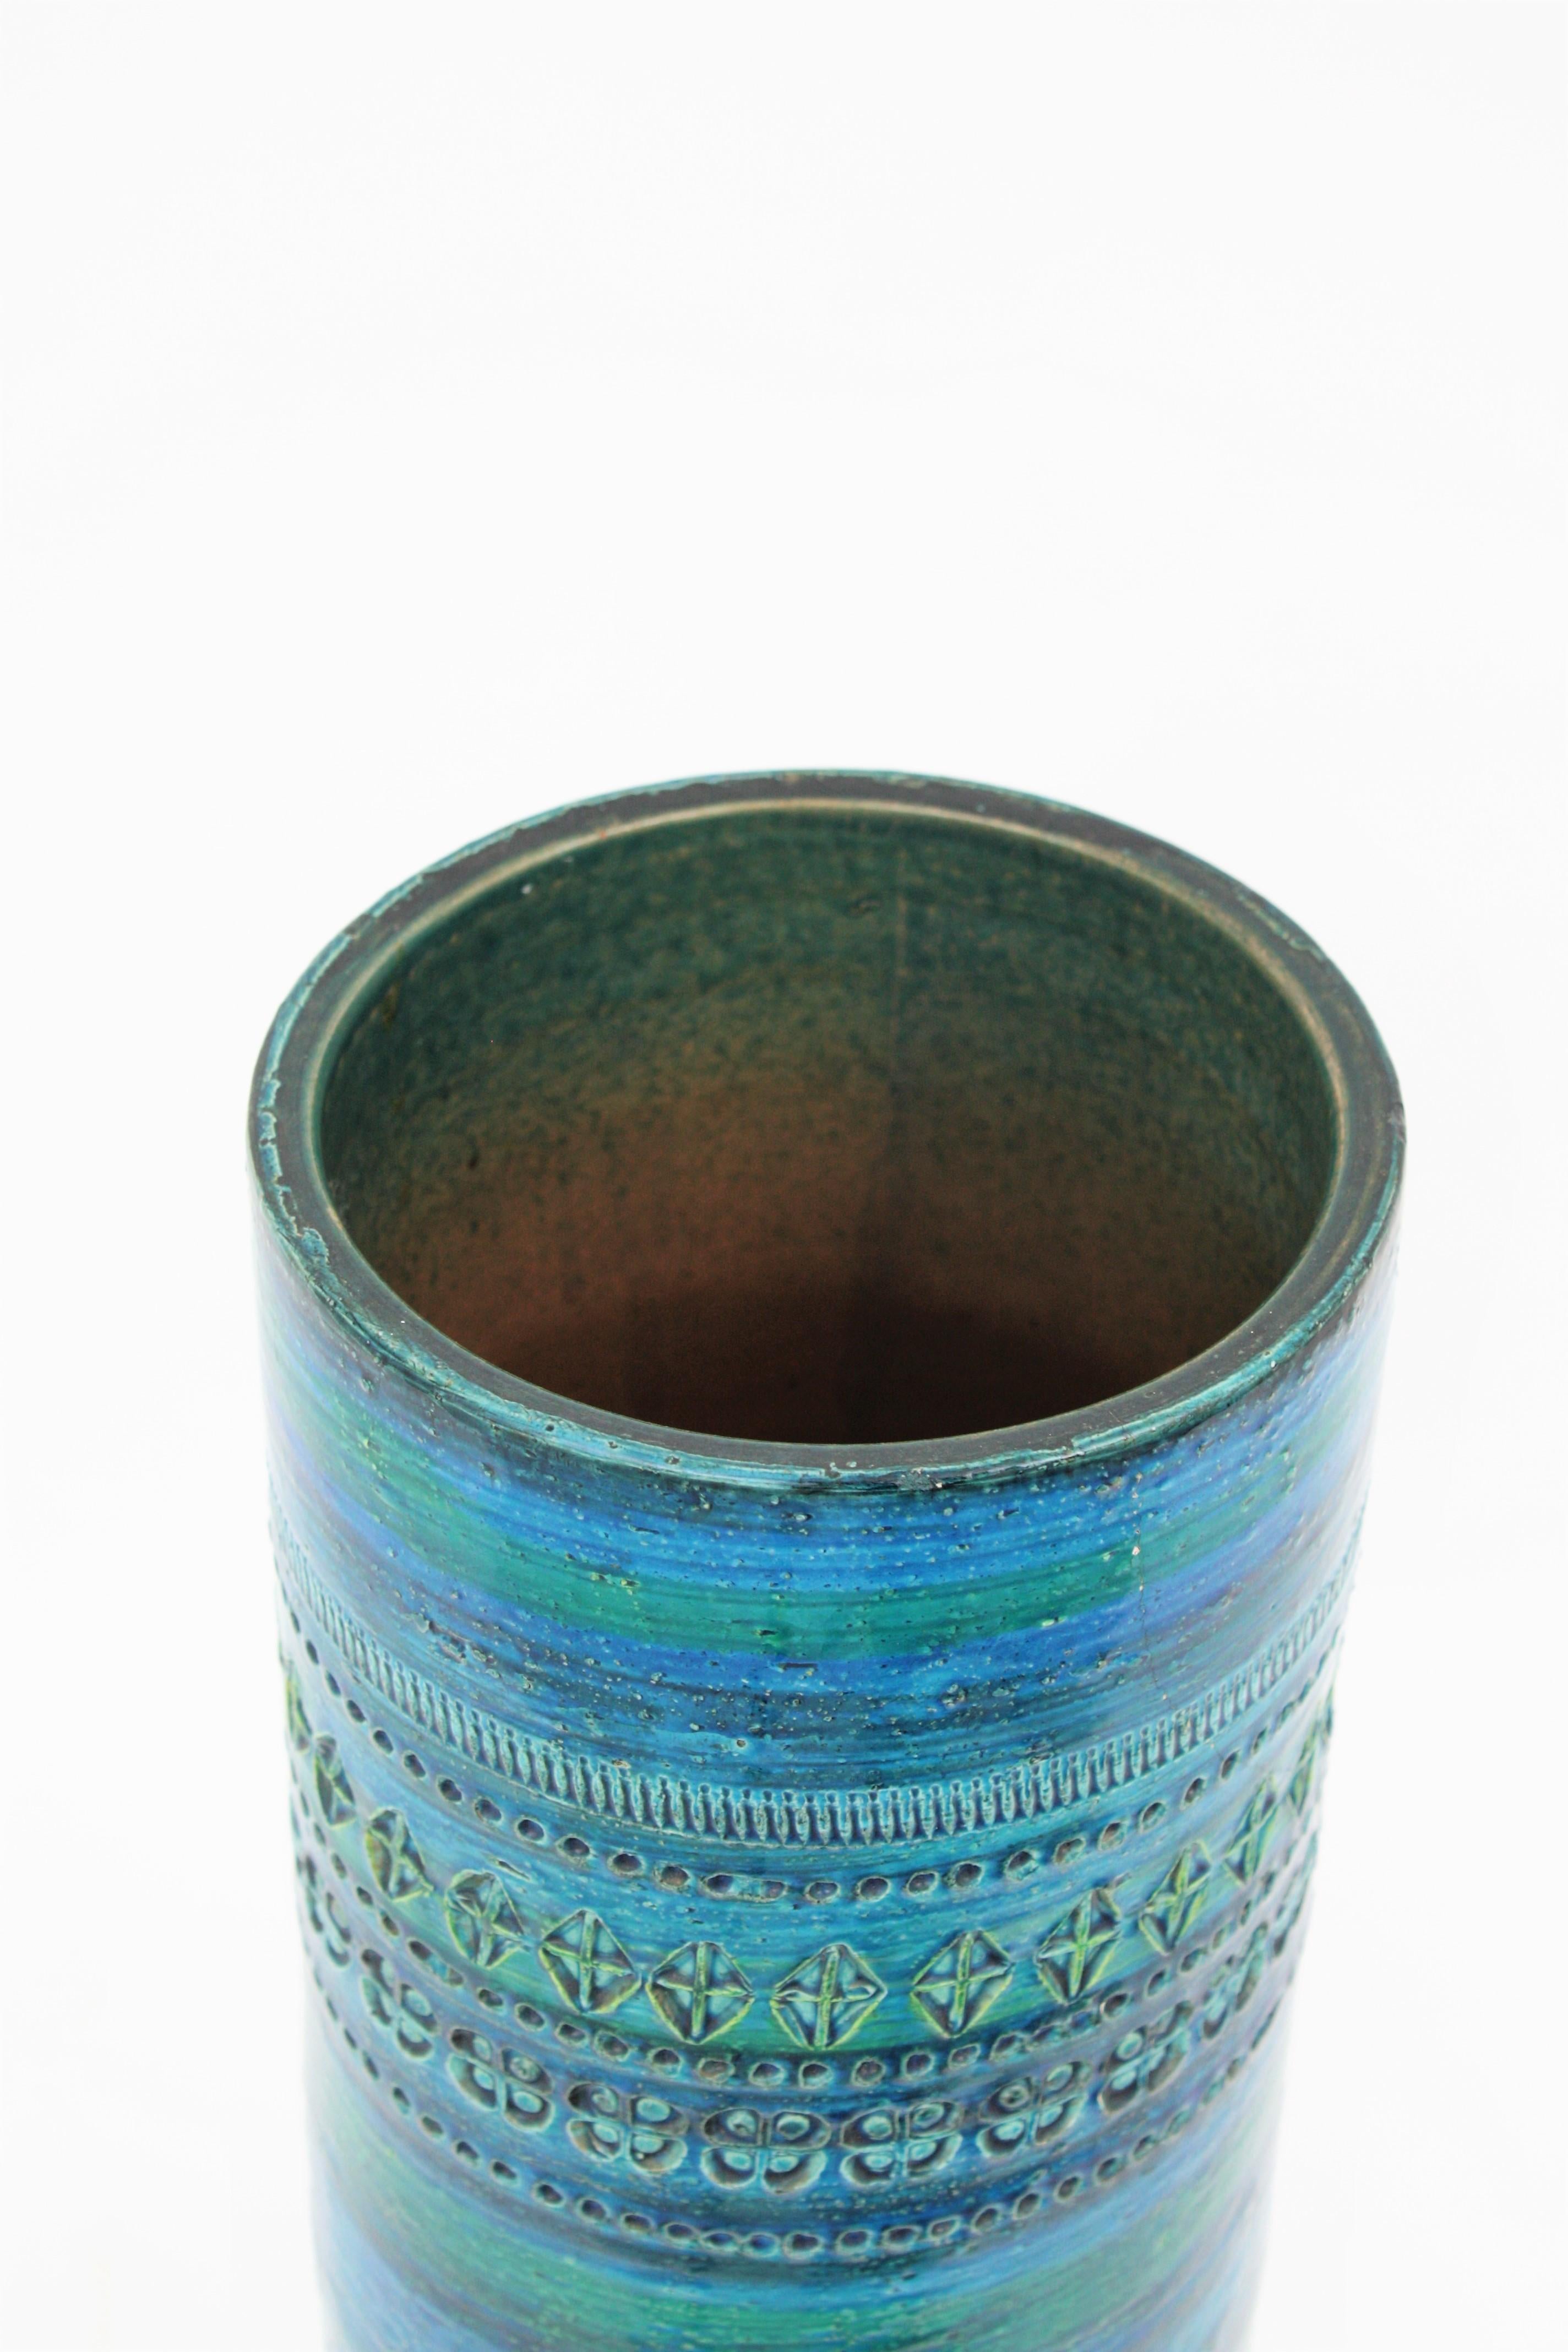 Aldo Londi for Bitossi Rimini Blue Glazed Ceramic Extra Large Vase, Italy, 1960s 1